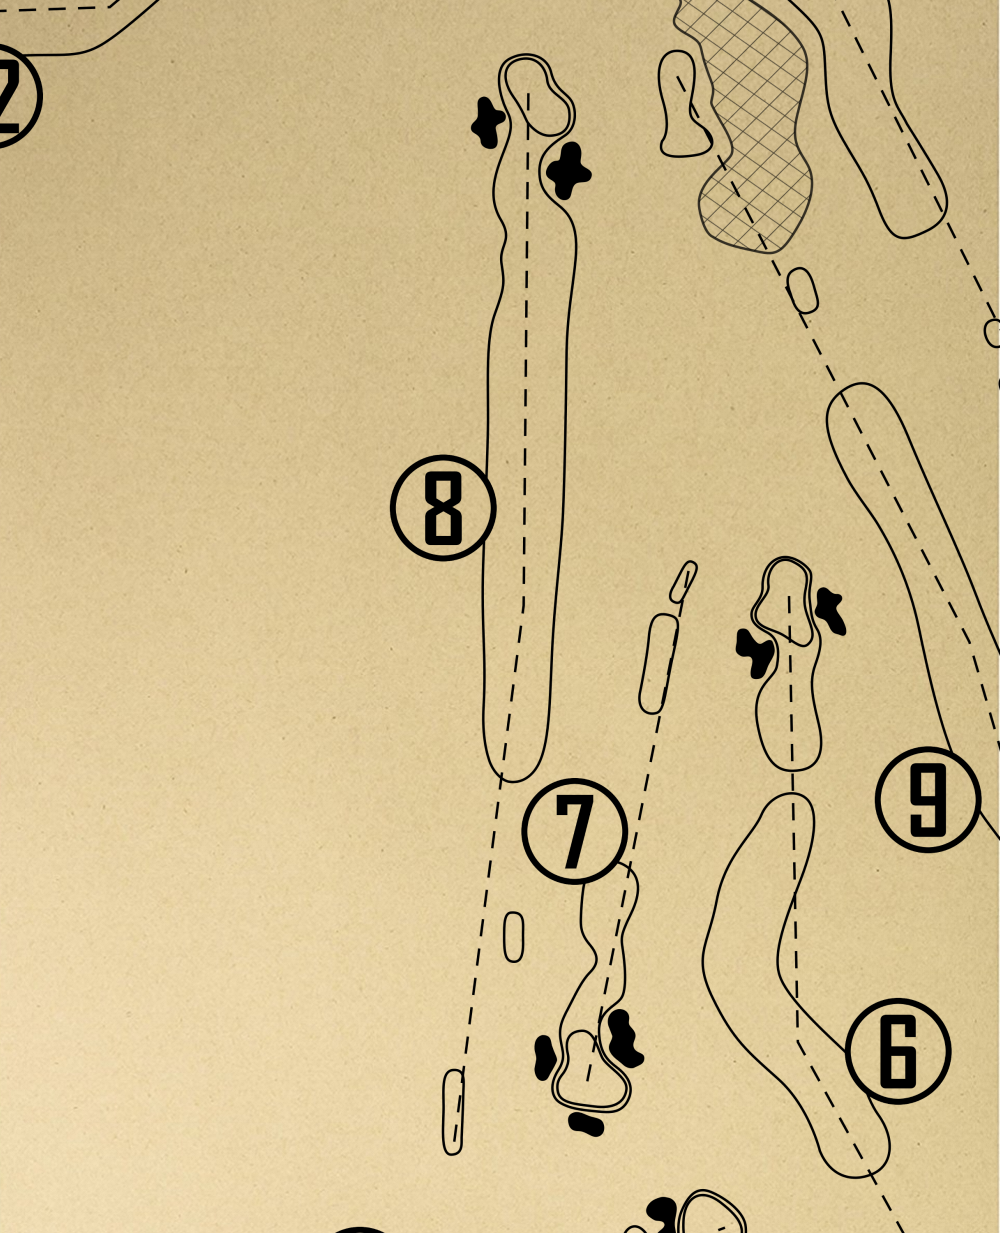 Eagle River Golf Course Outline (Print)